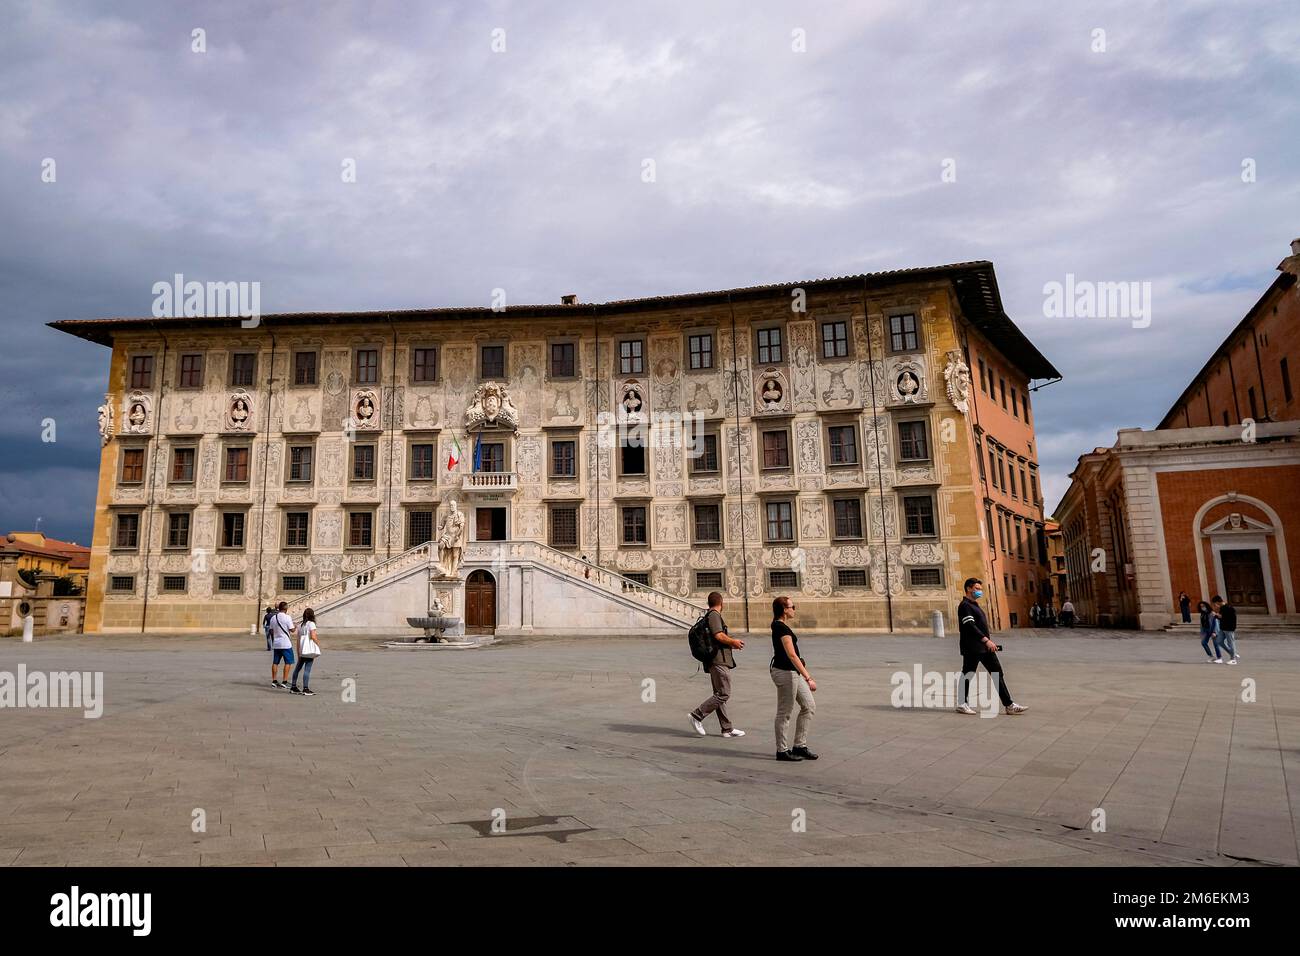 Pise, Italie - touristes marchant devant le Palazzo della Carovana sur la Piazza dei Cavalieri Banque D'Images